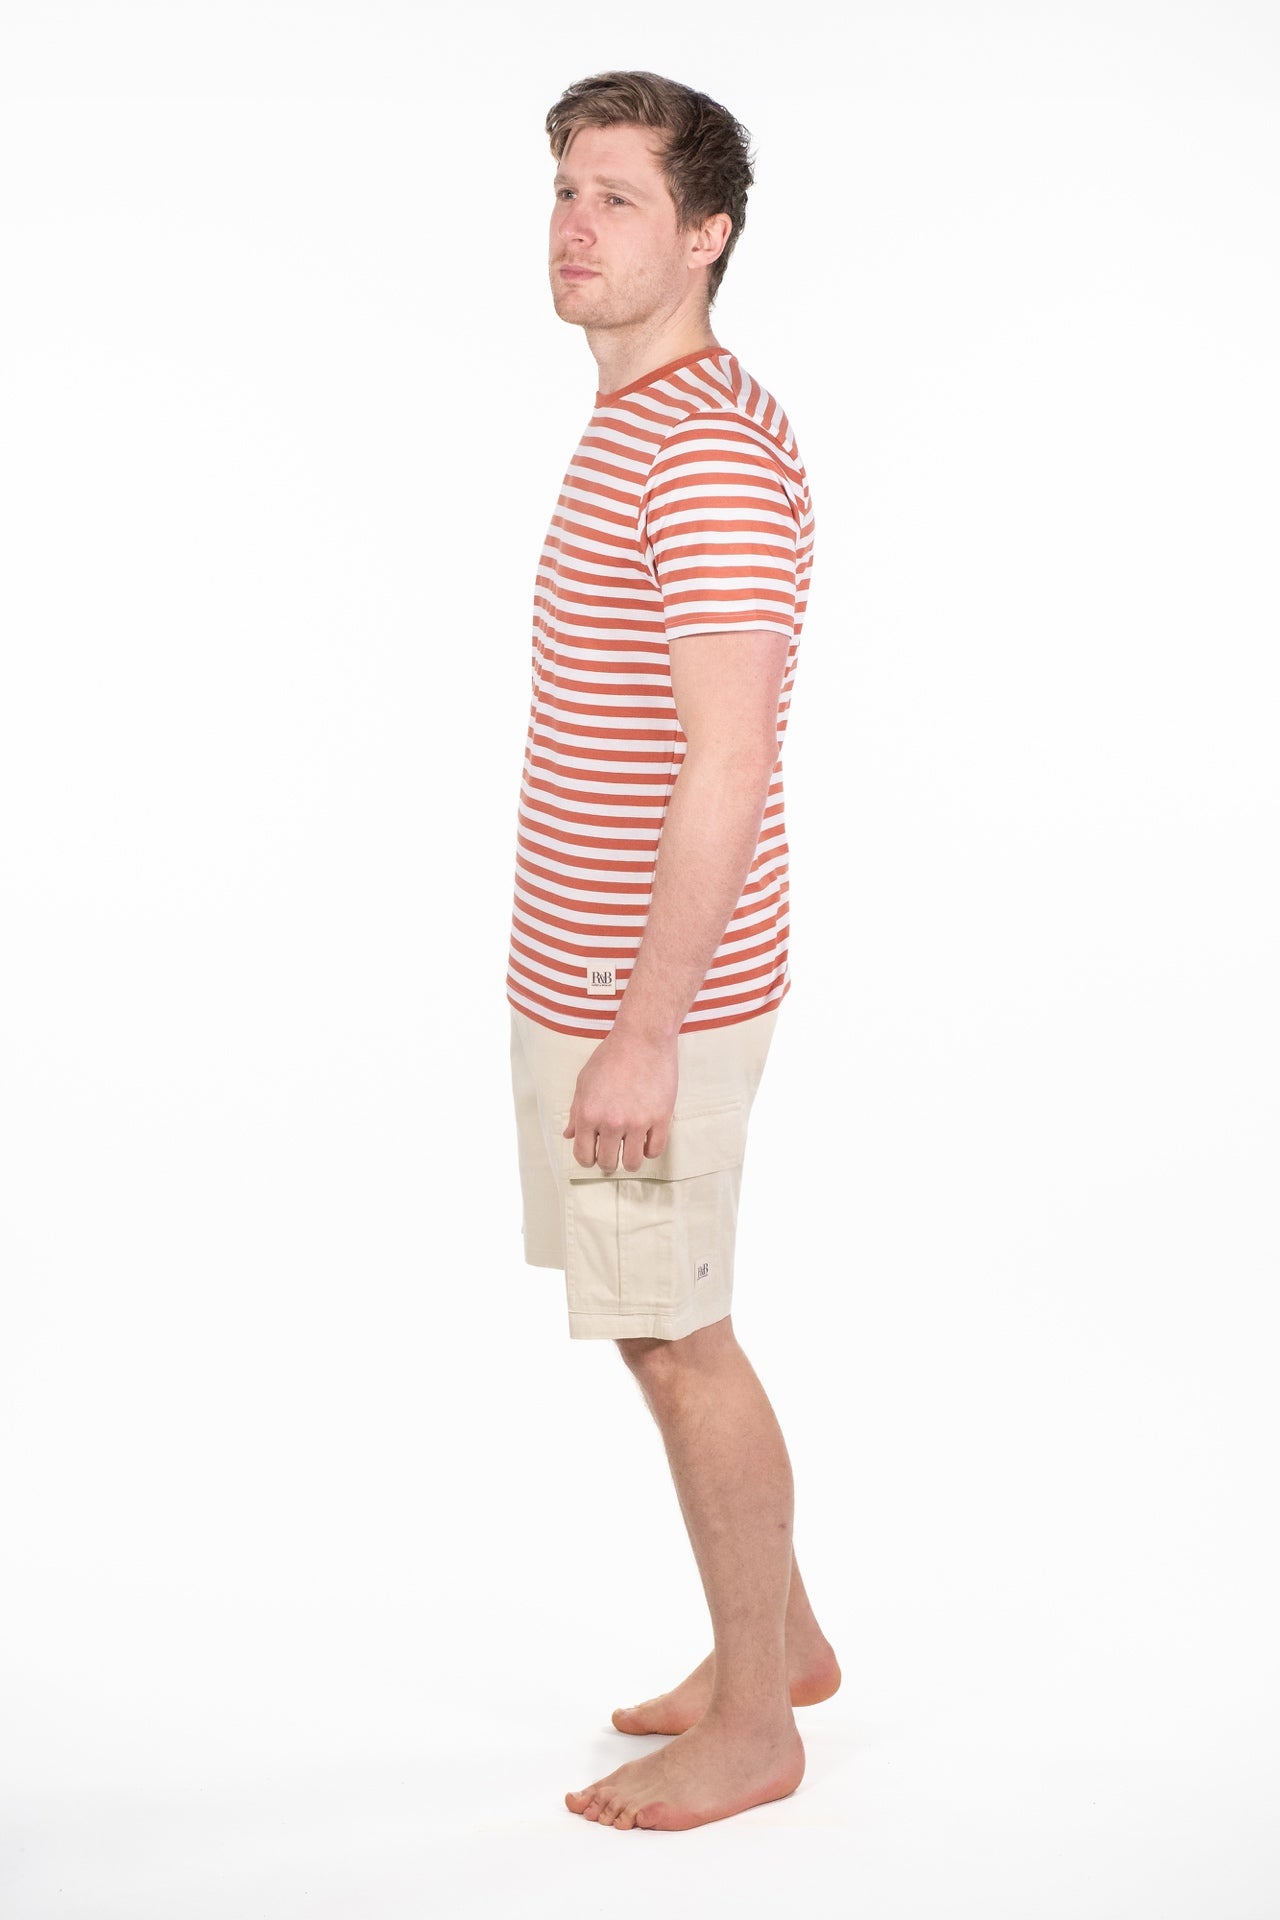 Albie Red Striped T-Shirt - Rupert and Buckley - T-Shirt